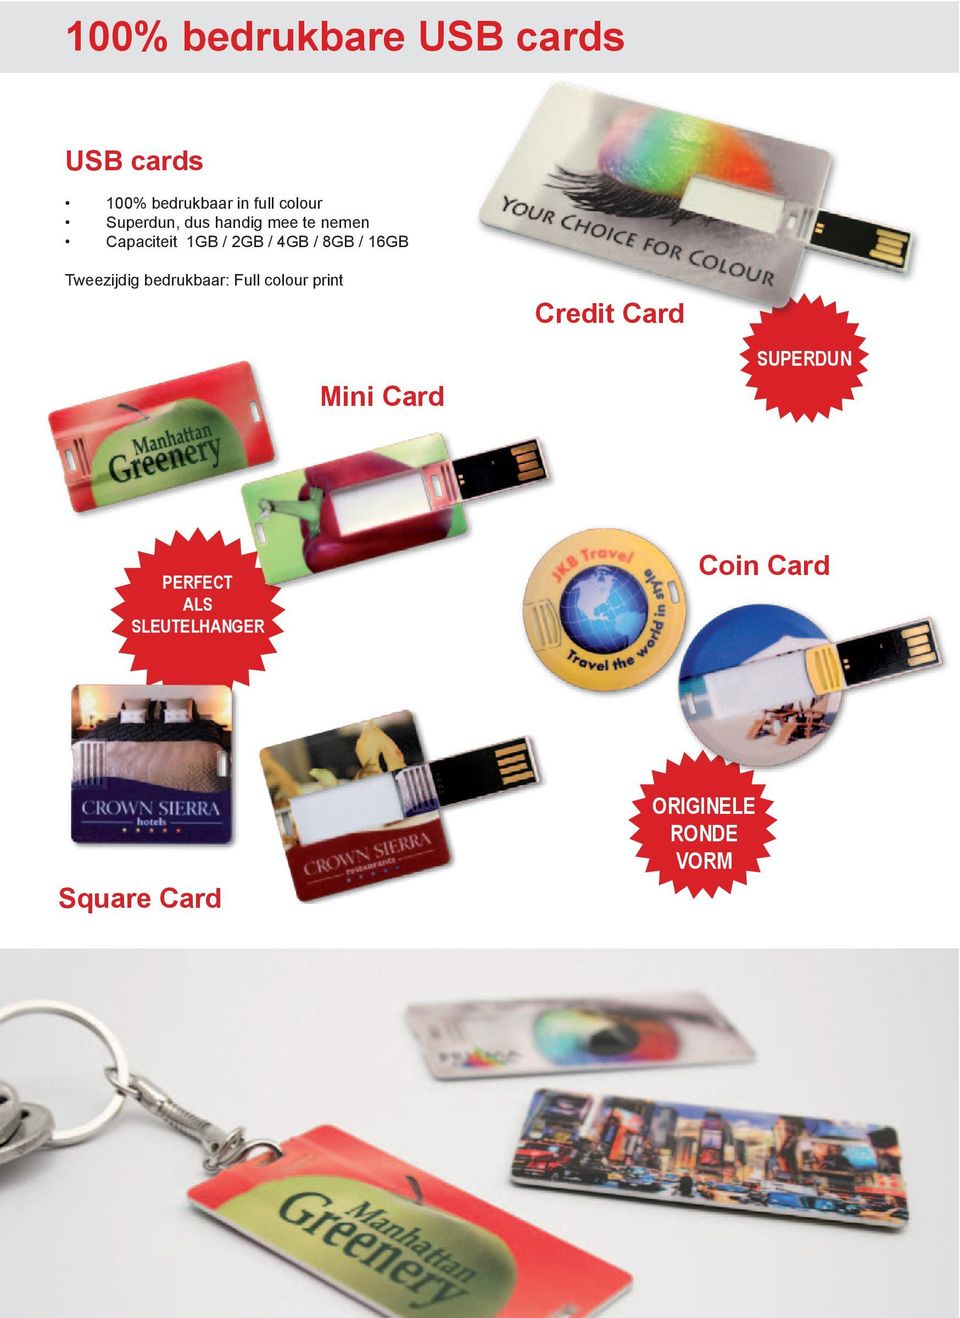 16GB Tweezijdig bedrukbaar: Full colour print Mini Card Credit Card